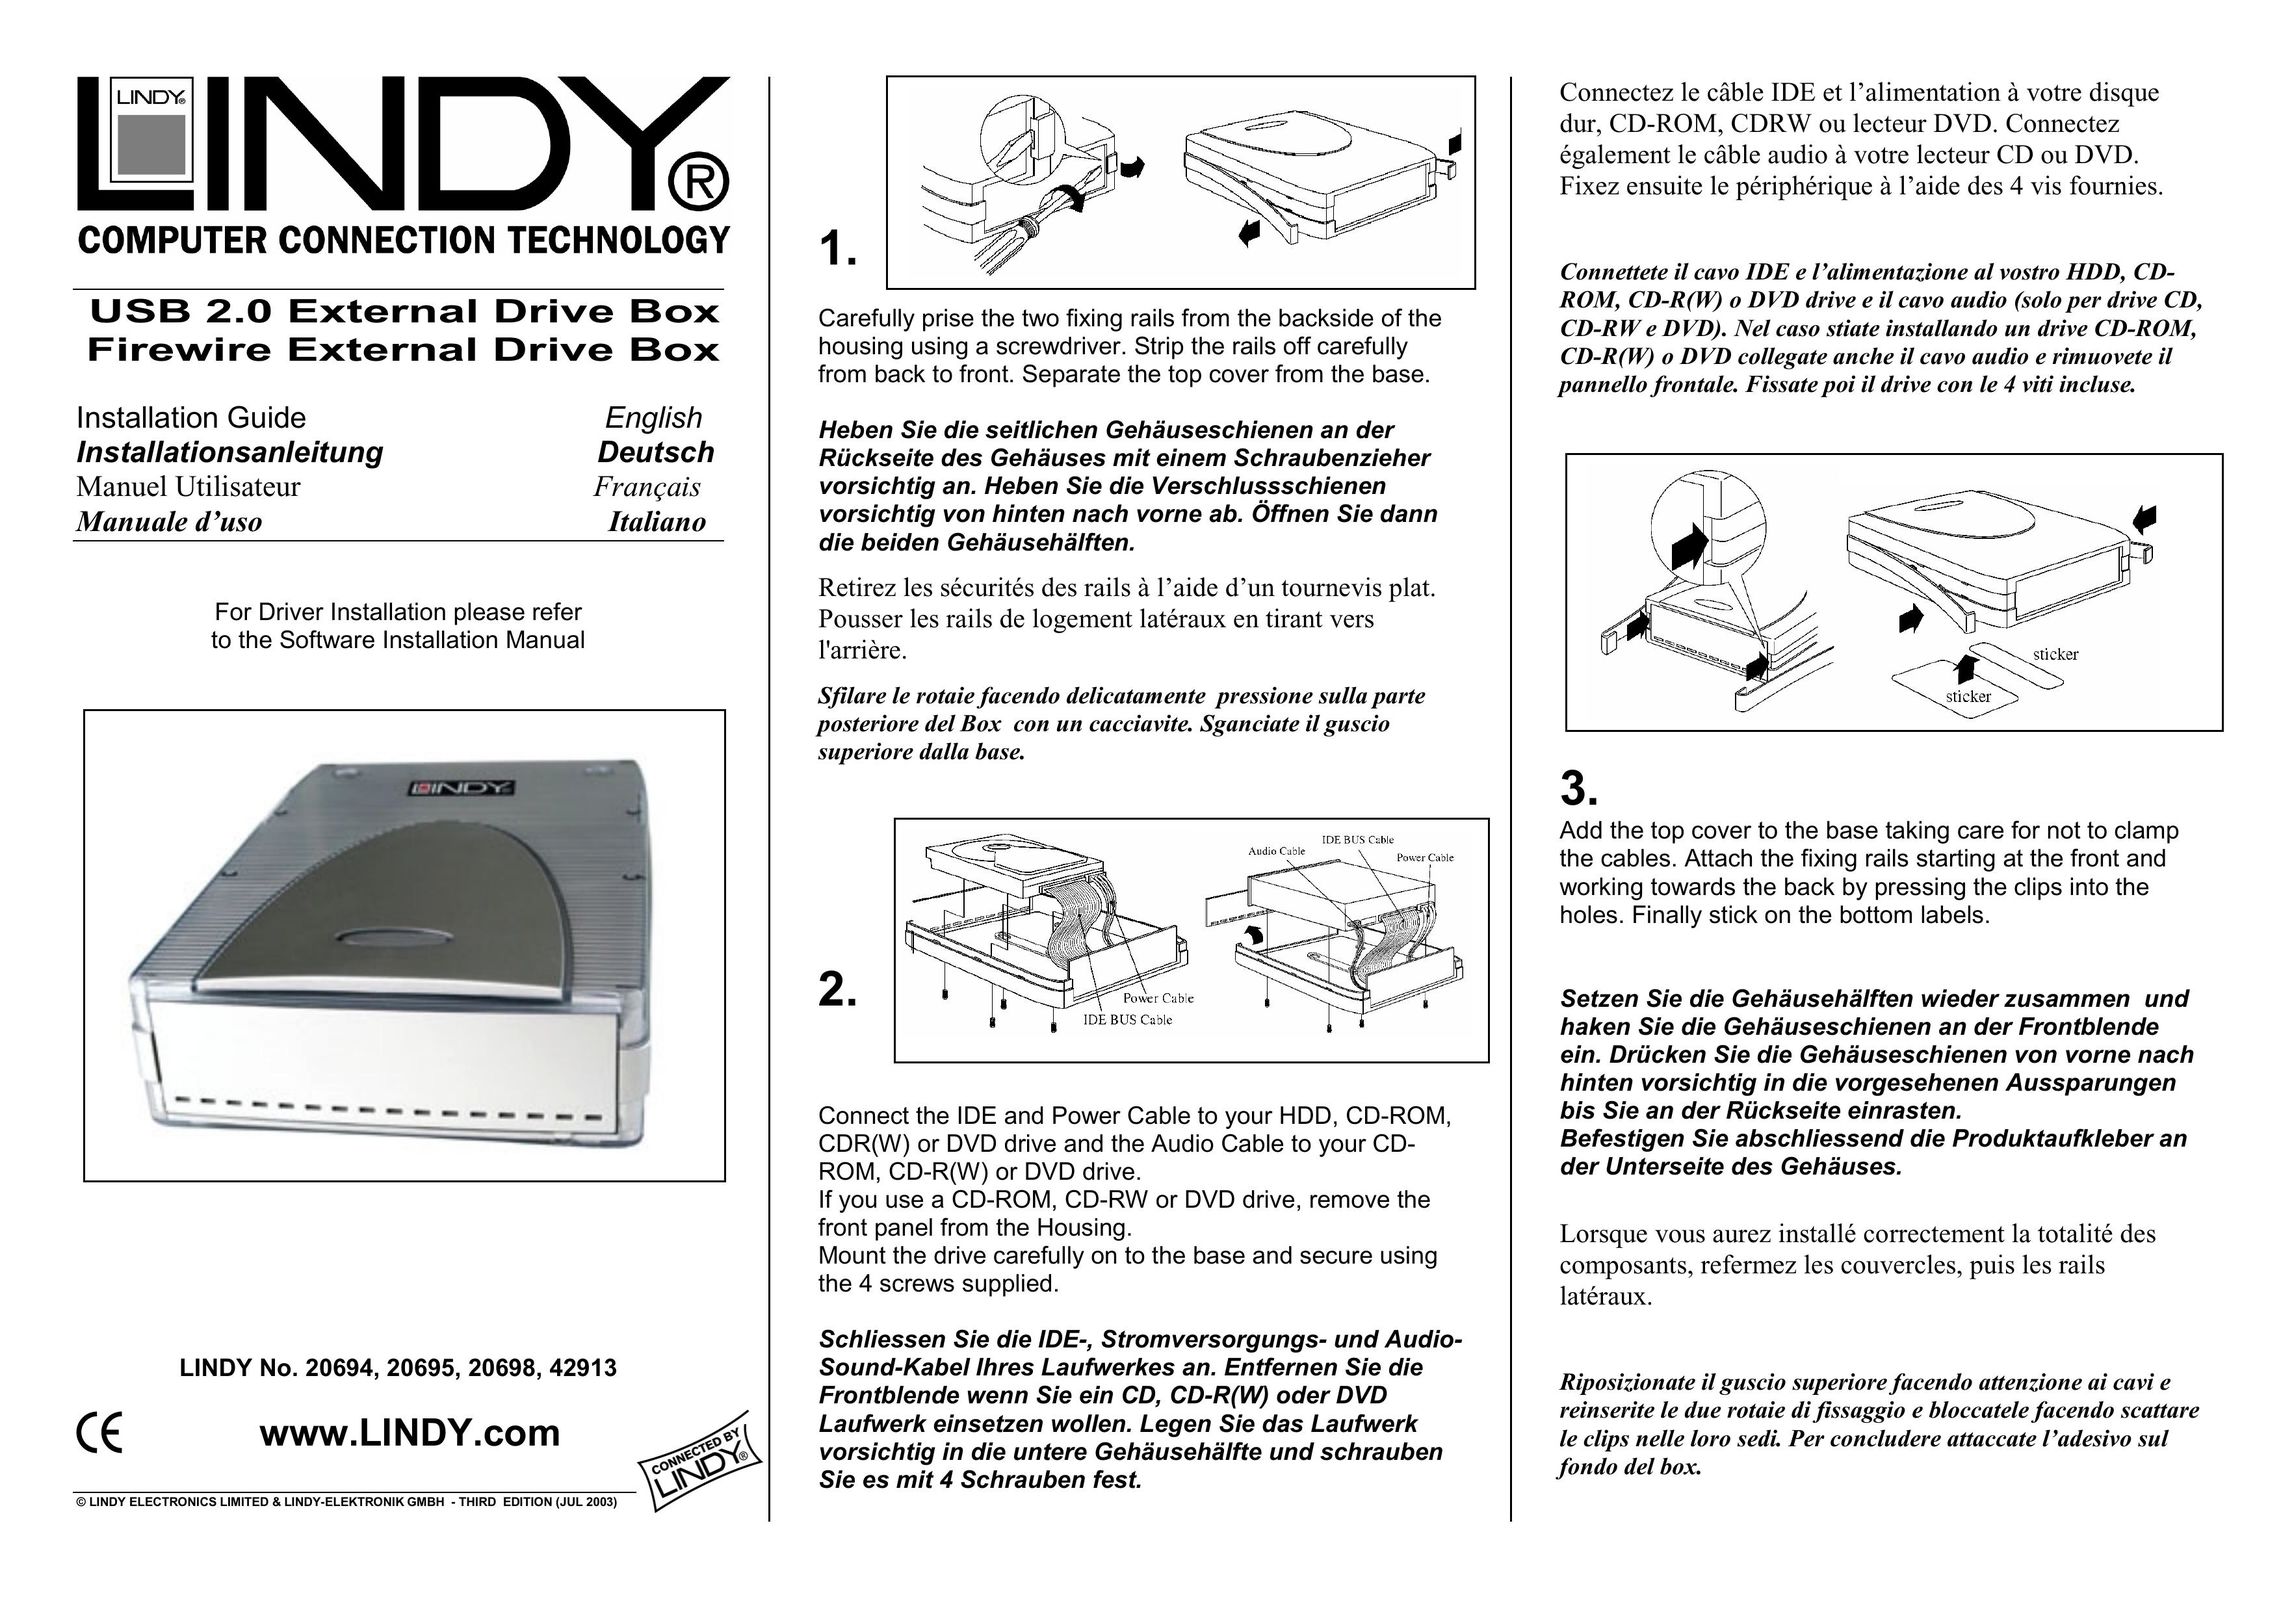 Lindy 20694 Computer Drive User Manual